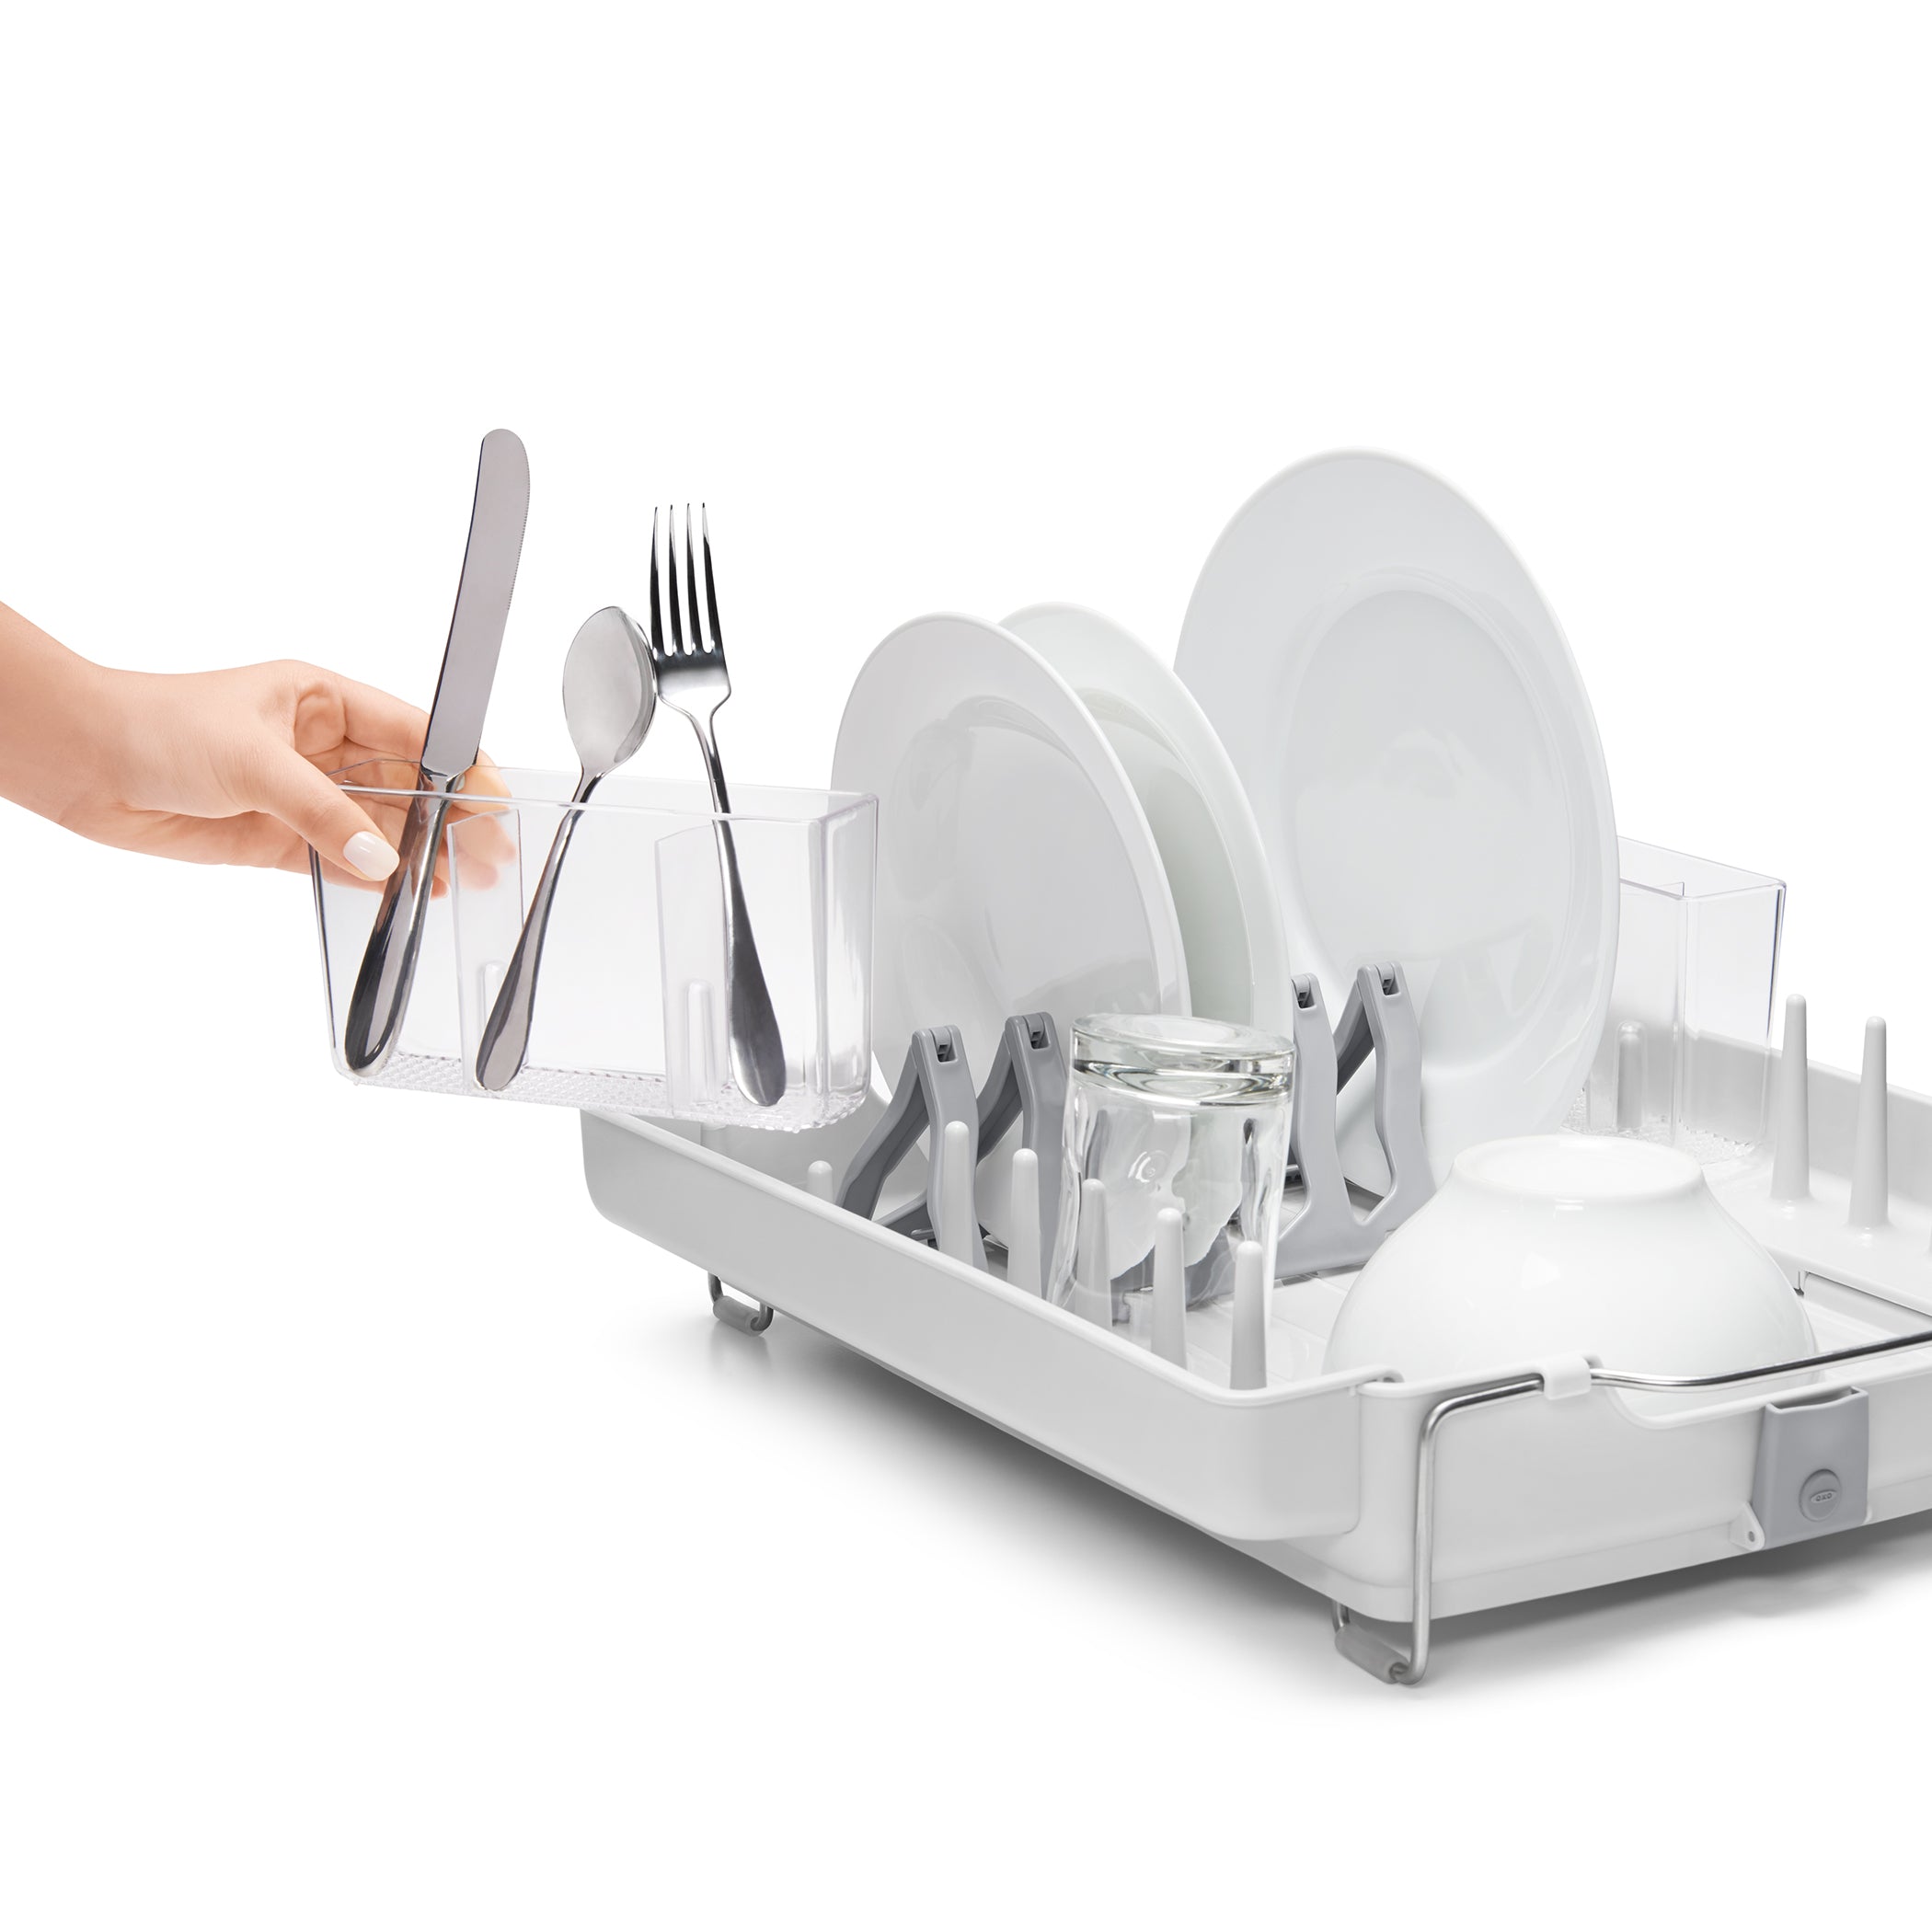 OXO Good Grips - Foldaway Dish Rack